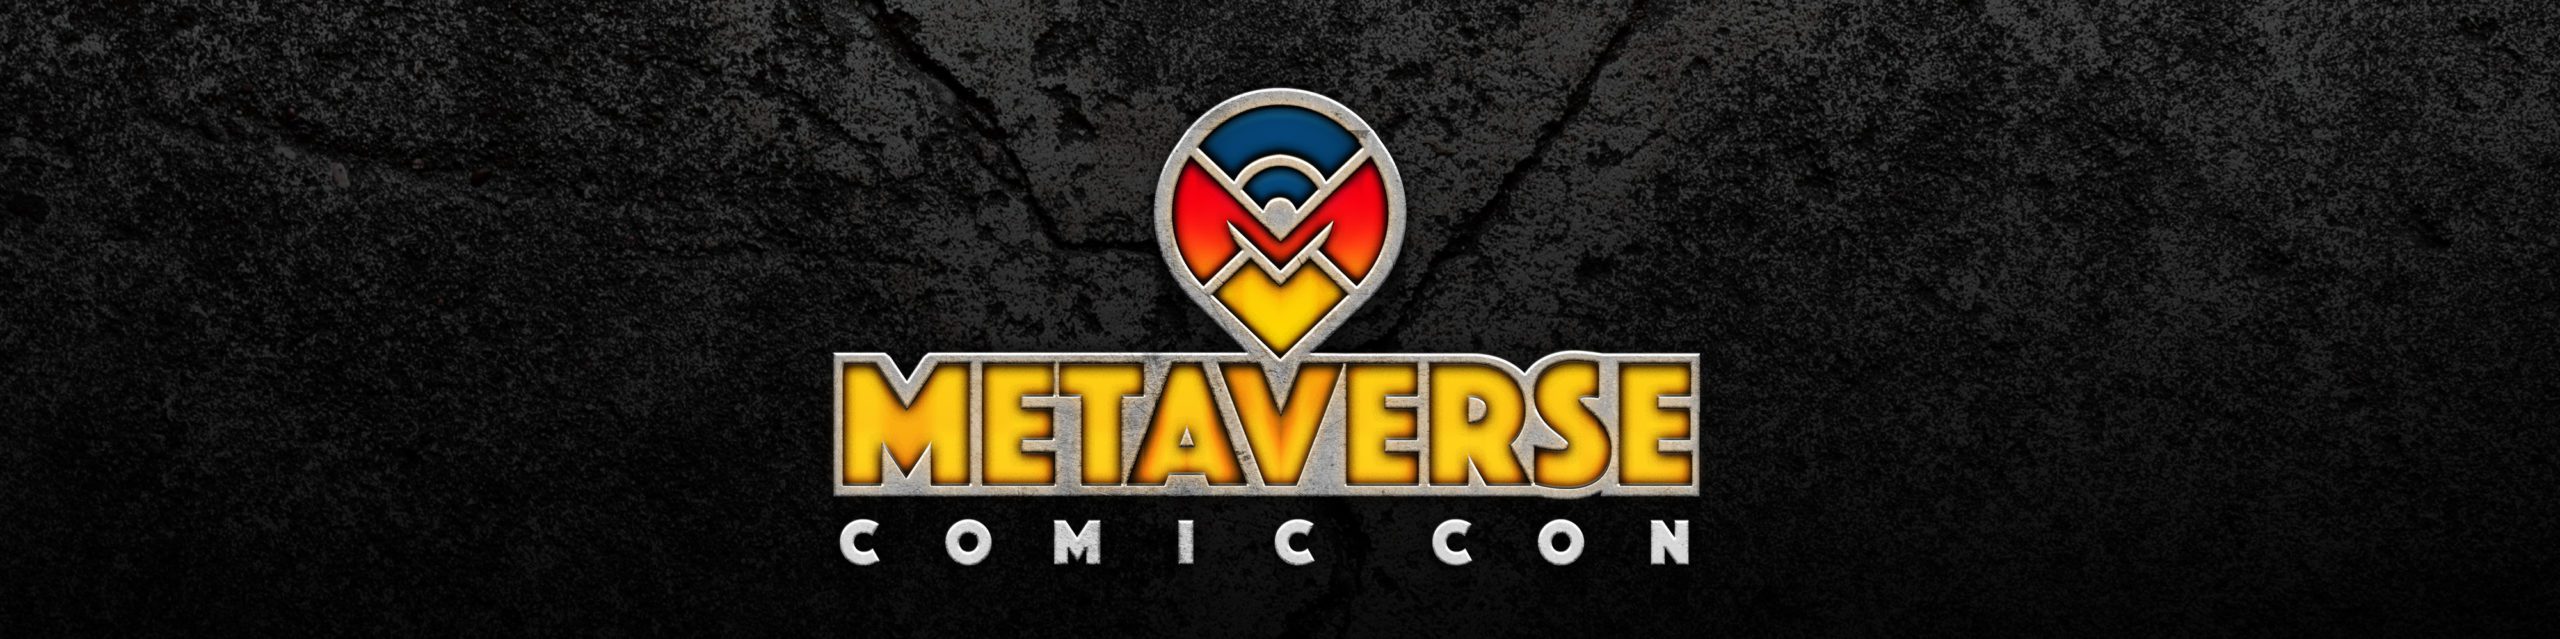 Comic Con Metaverse